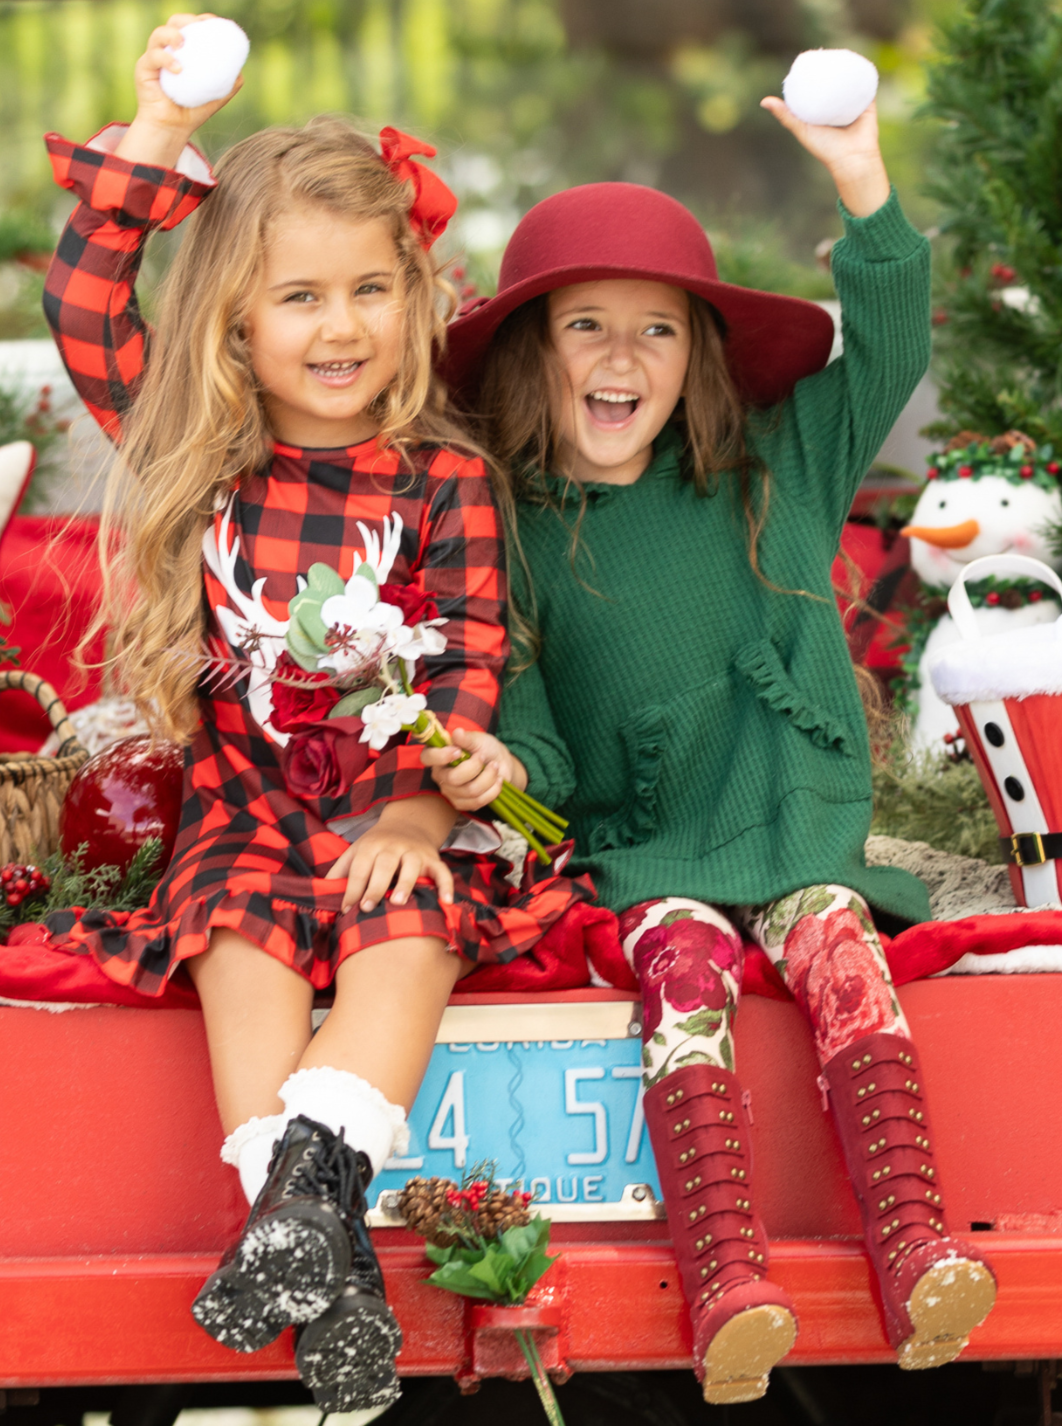 Toddler Clothing Sale | Girls Checkered Plaid Reindeer Ruffled Dress